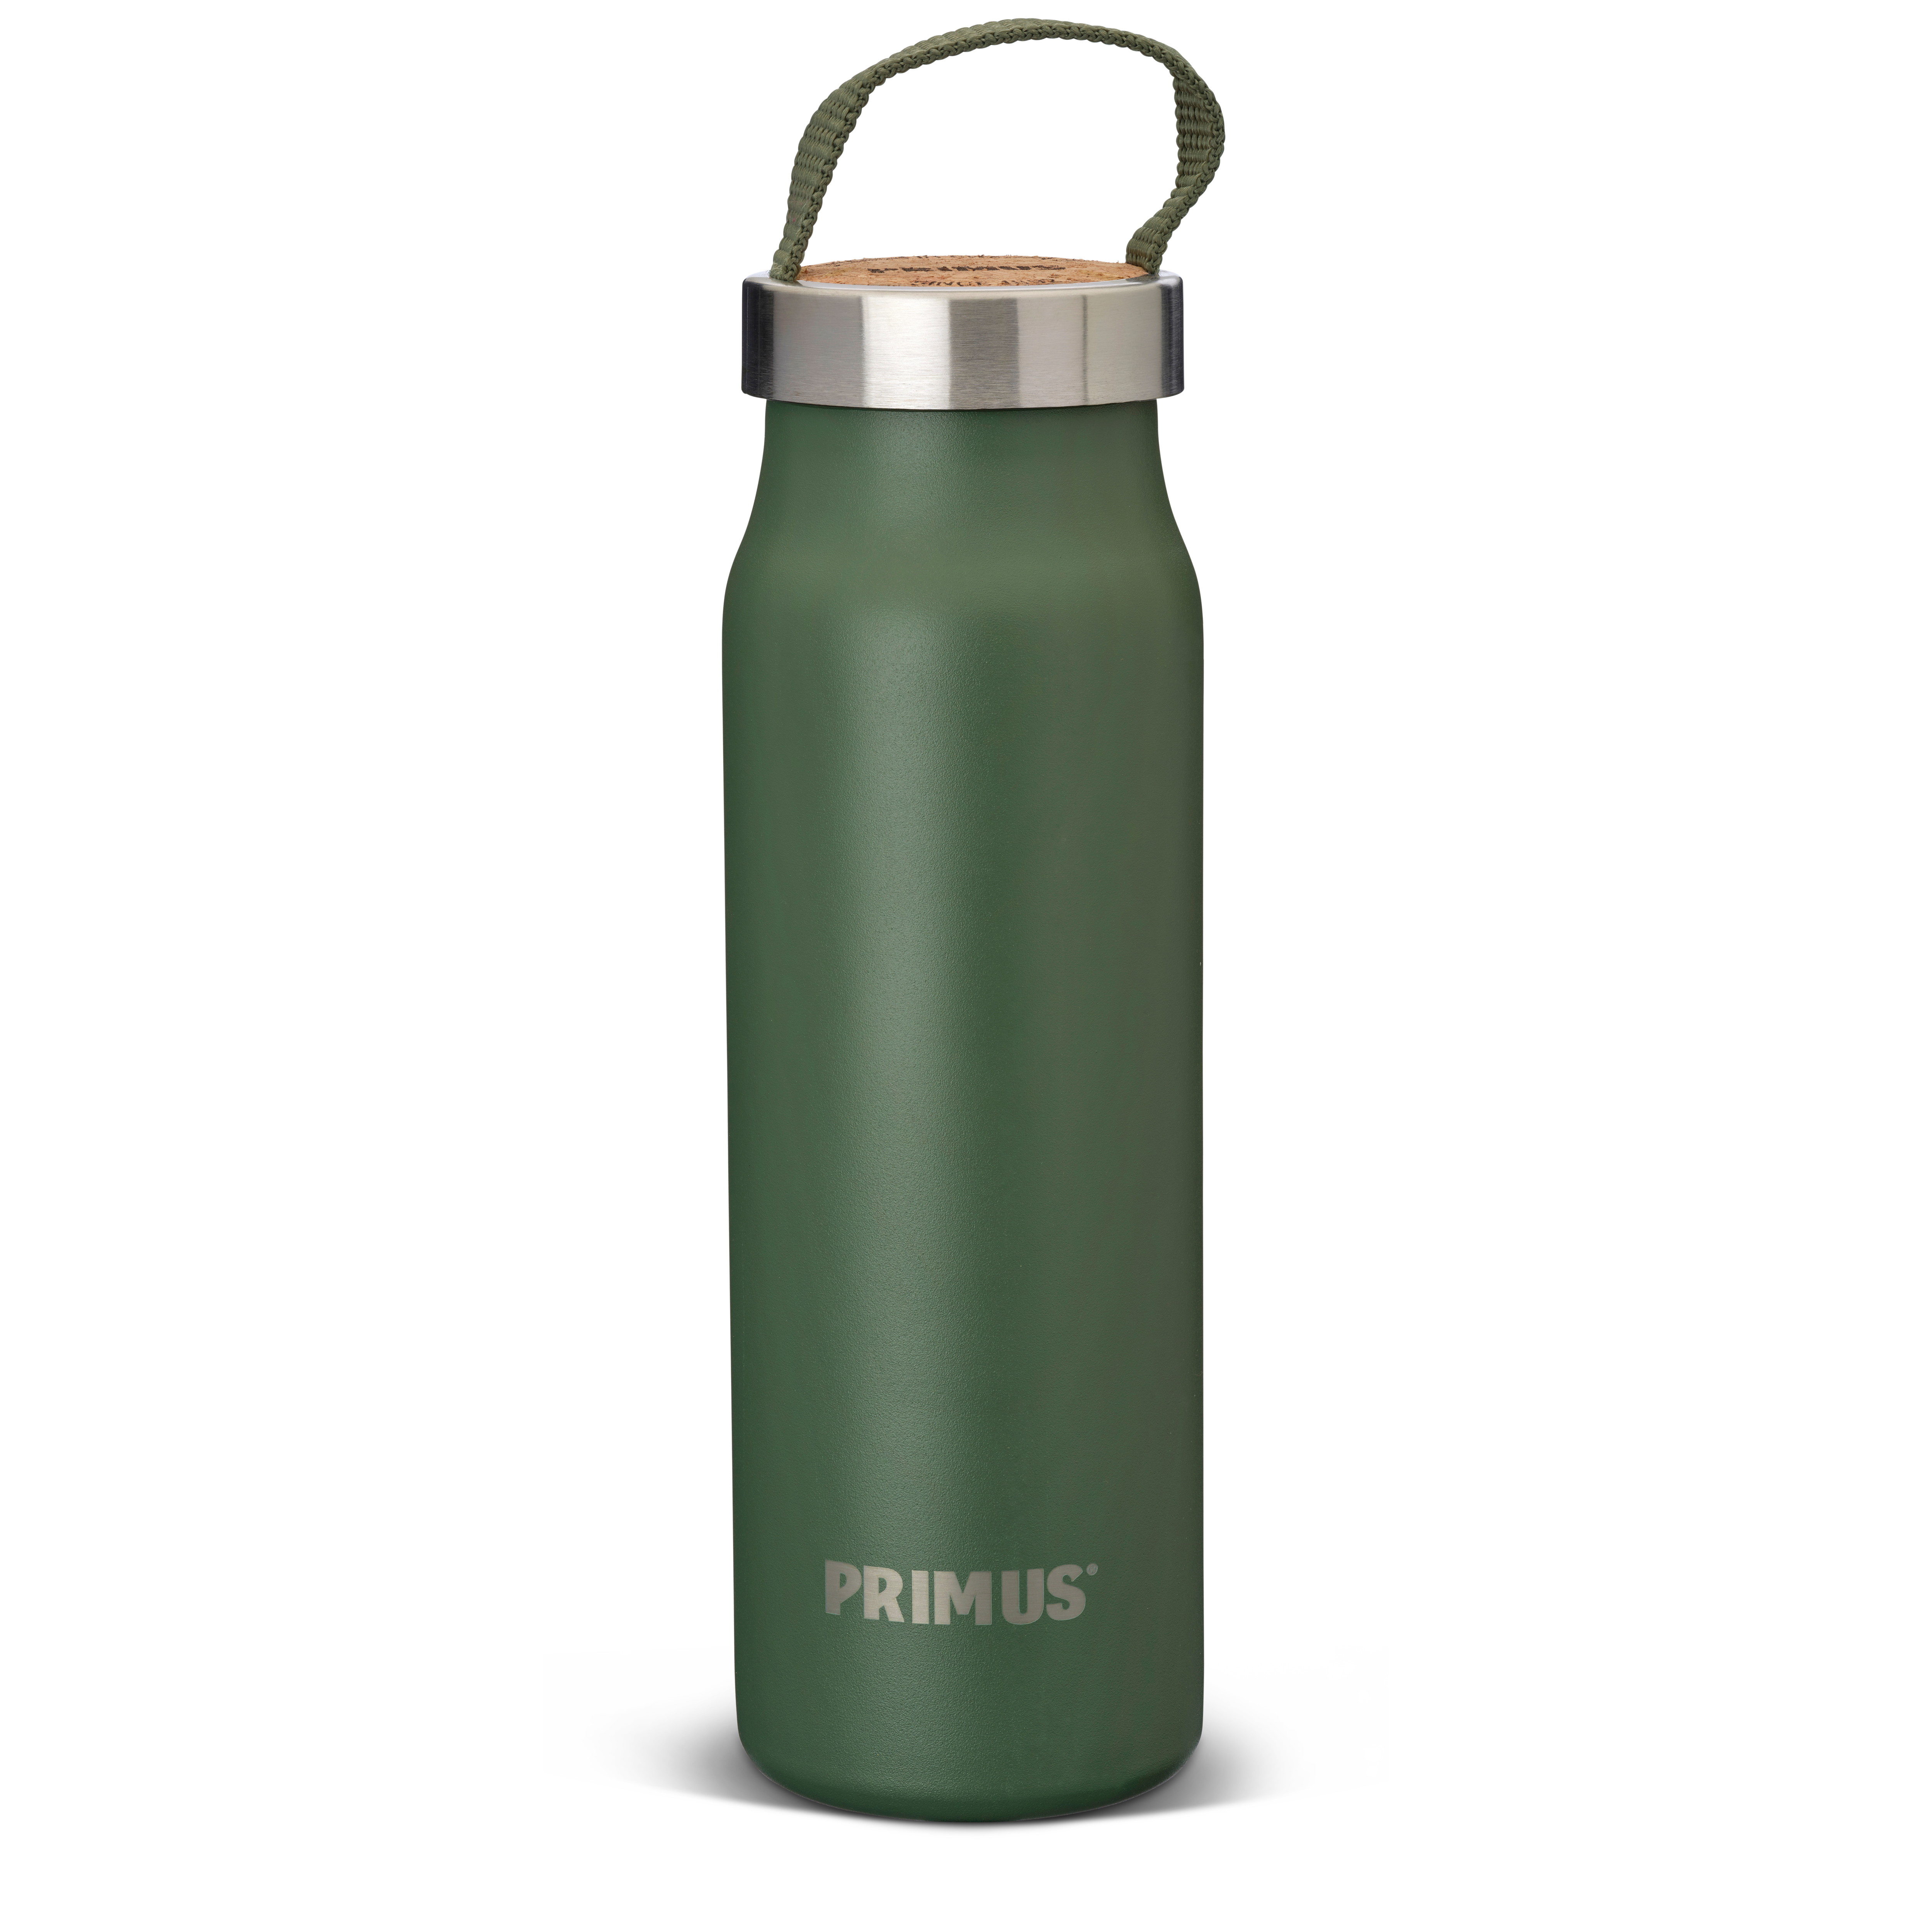 Primus Klunken Vacuum Bottle 0.5 L Green